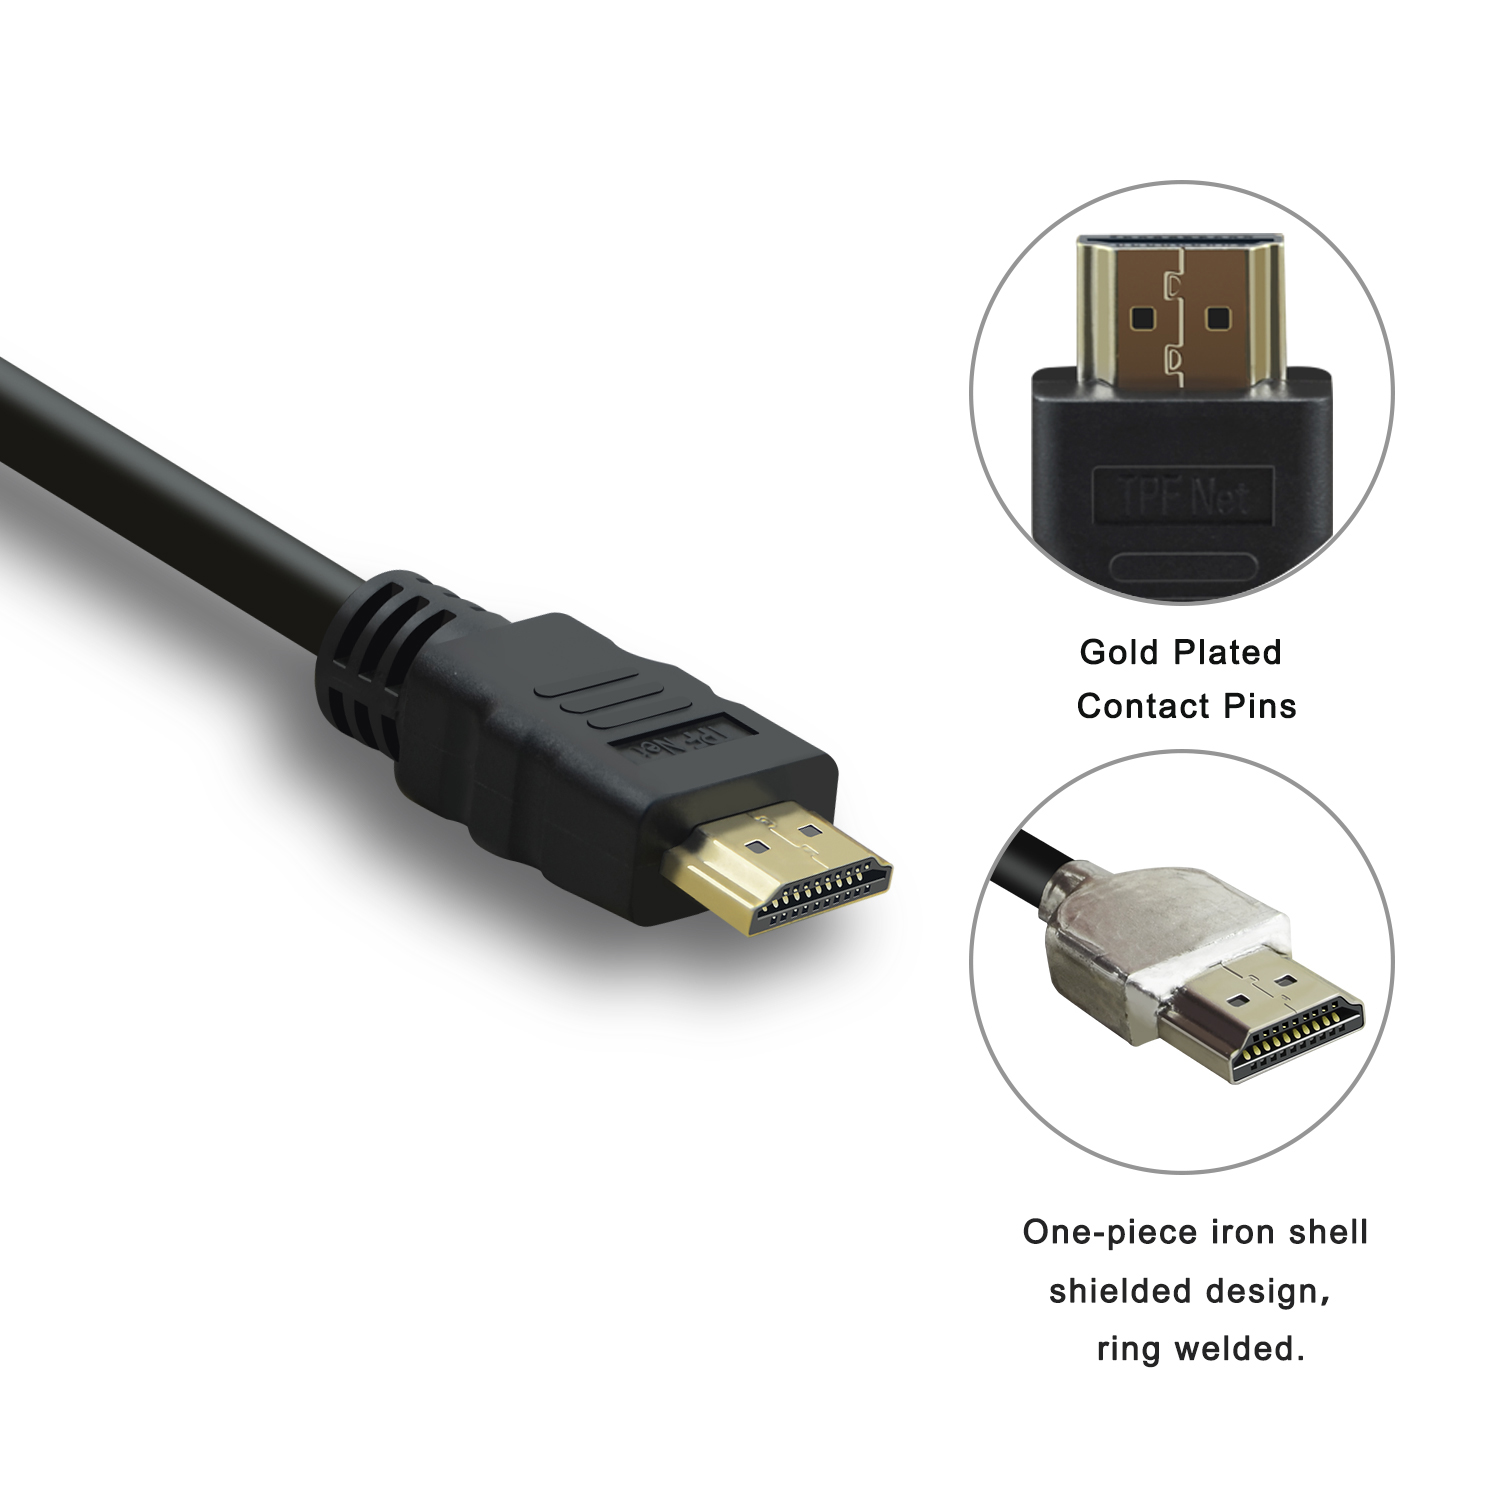 3er Ethernet, TPFNET Ultra schwarz, Pack Premium HD, abwärtskompatibel, HDMI-Kabel mit HDMI-Kabel 8K, 1m